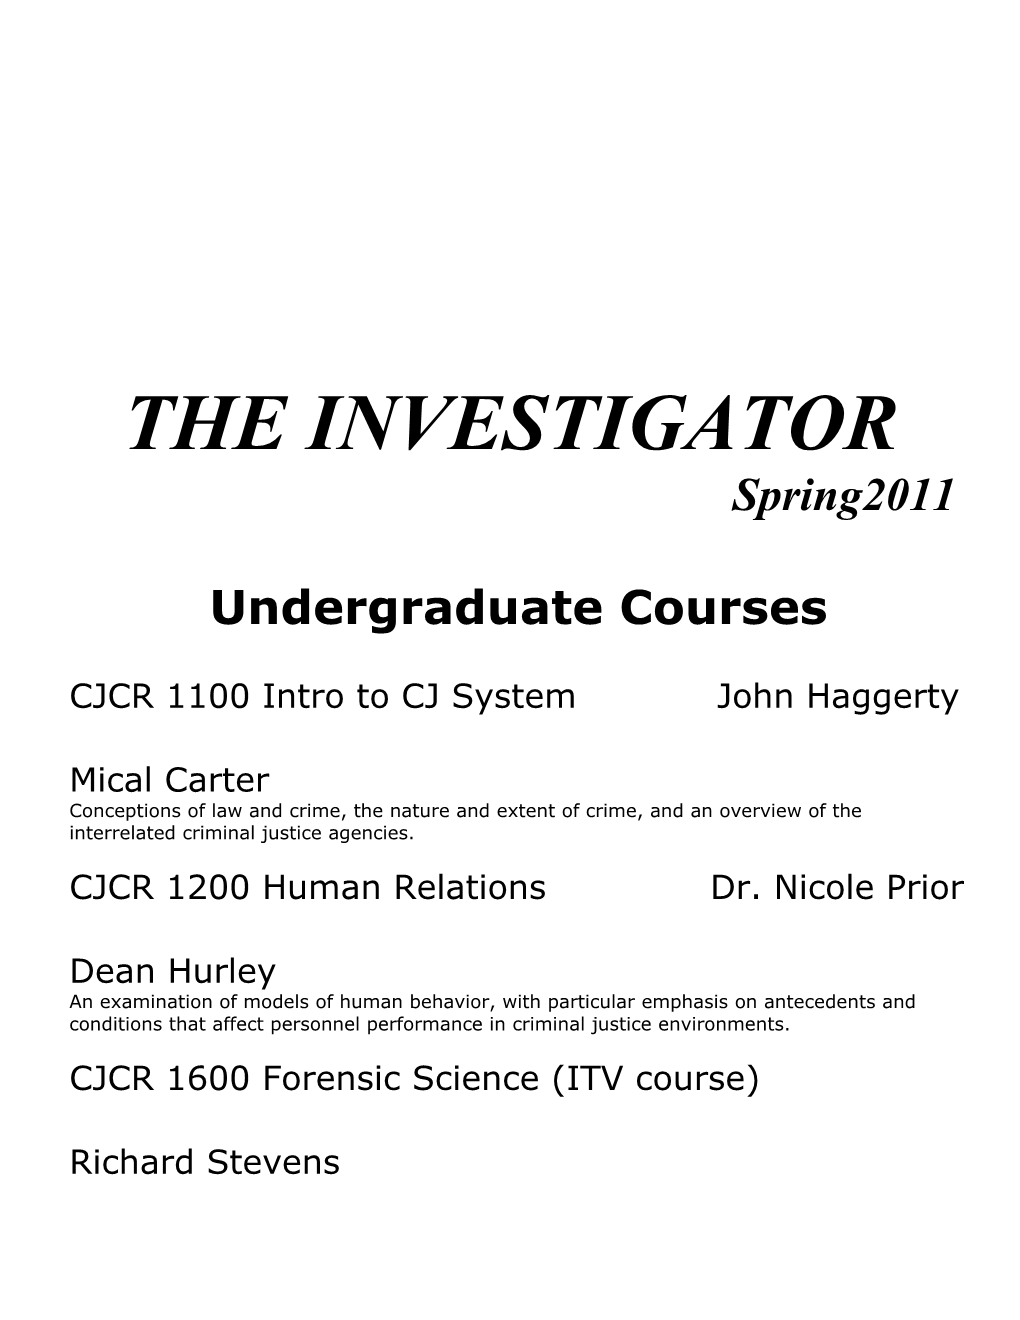 Undergraduate Courses